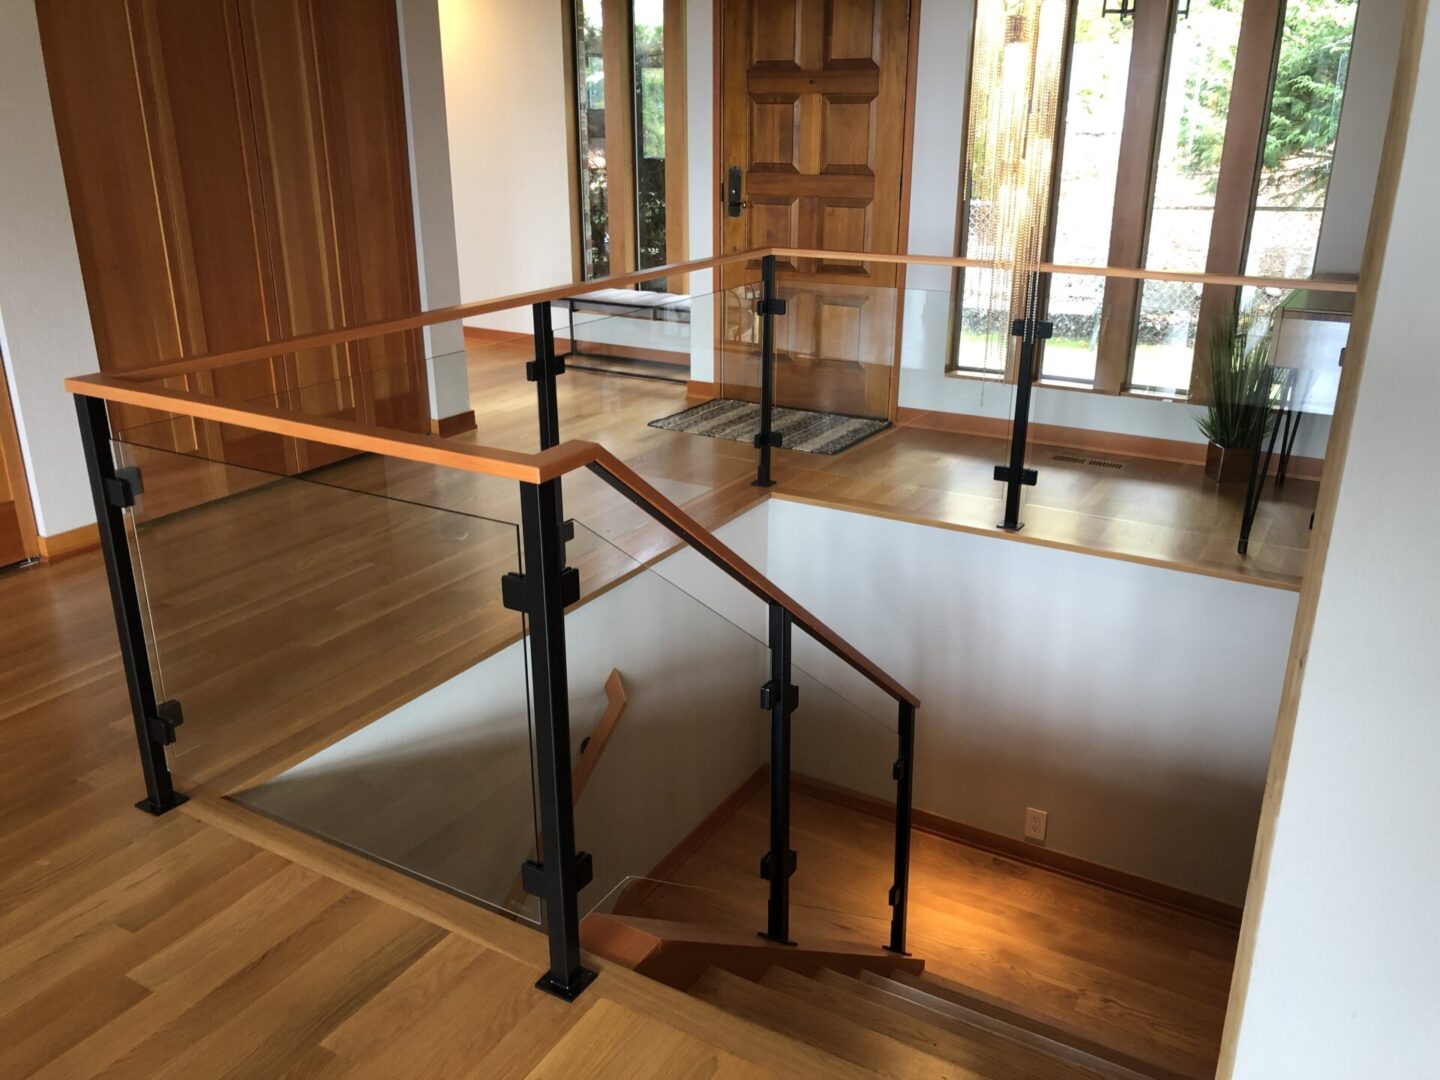 Floating glass style custom handrails and railings